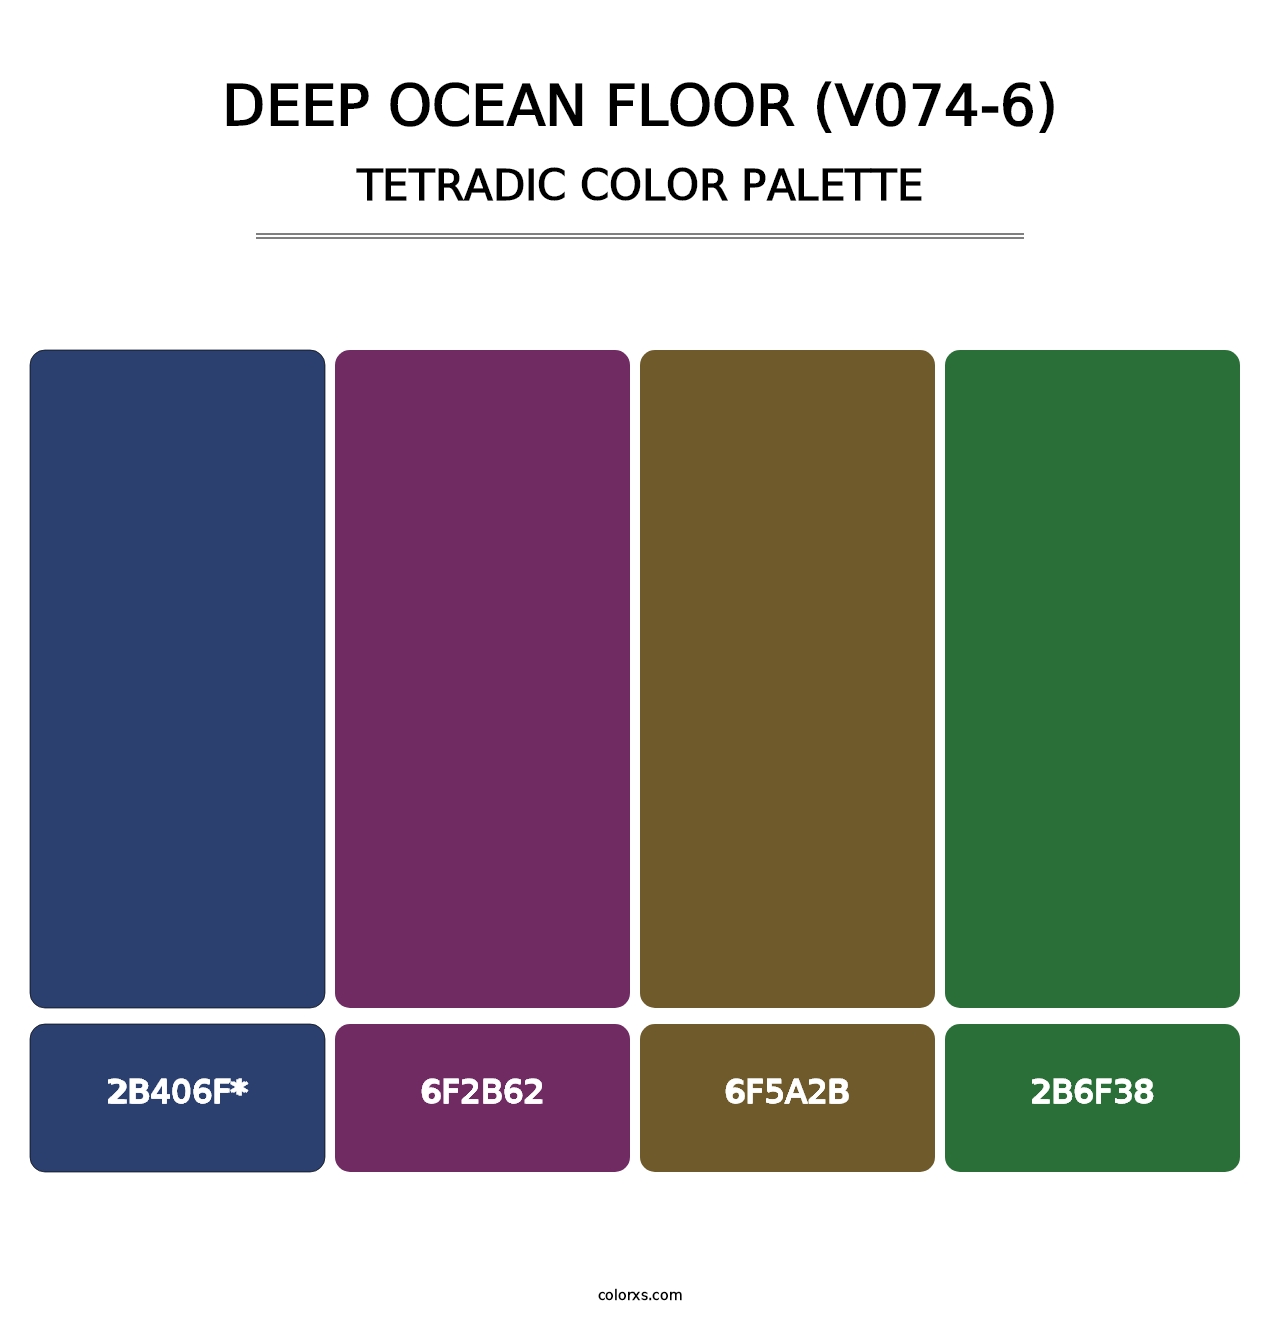 Deep Ocean Floor (V074-6) - Tetradic Color Palette